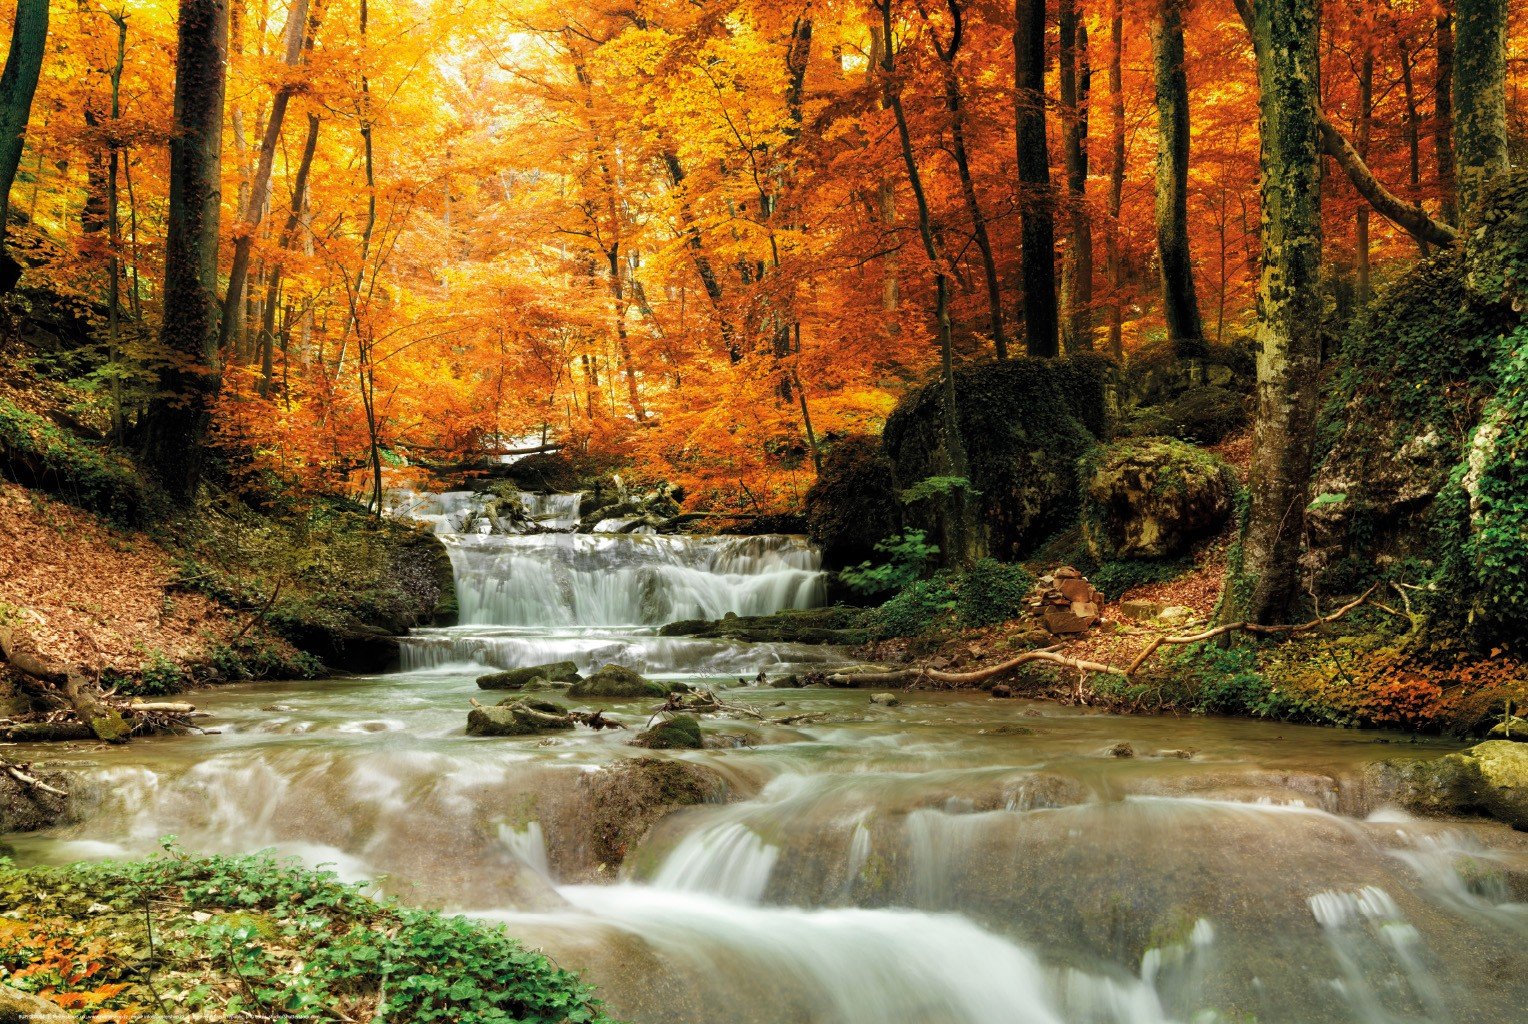 Poster: Autumn river